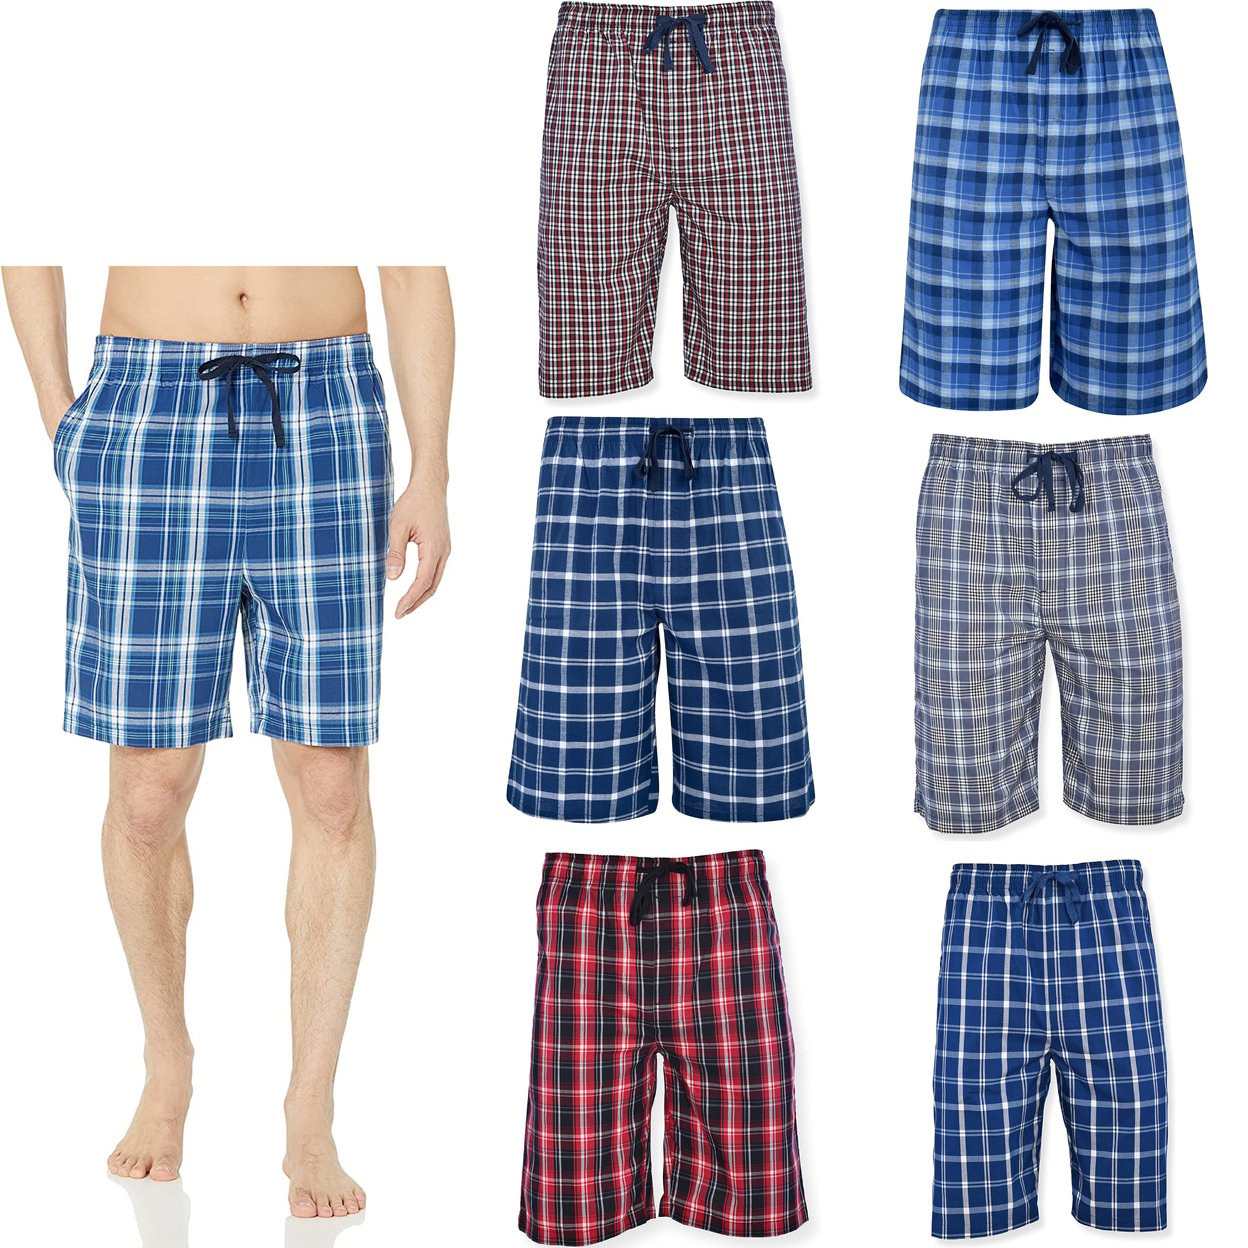 2-Pack: Men's Ultra Soft Plaid Lounge Pajama Sleep Wear Shorts - Blue & Blue, Small